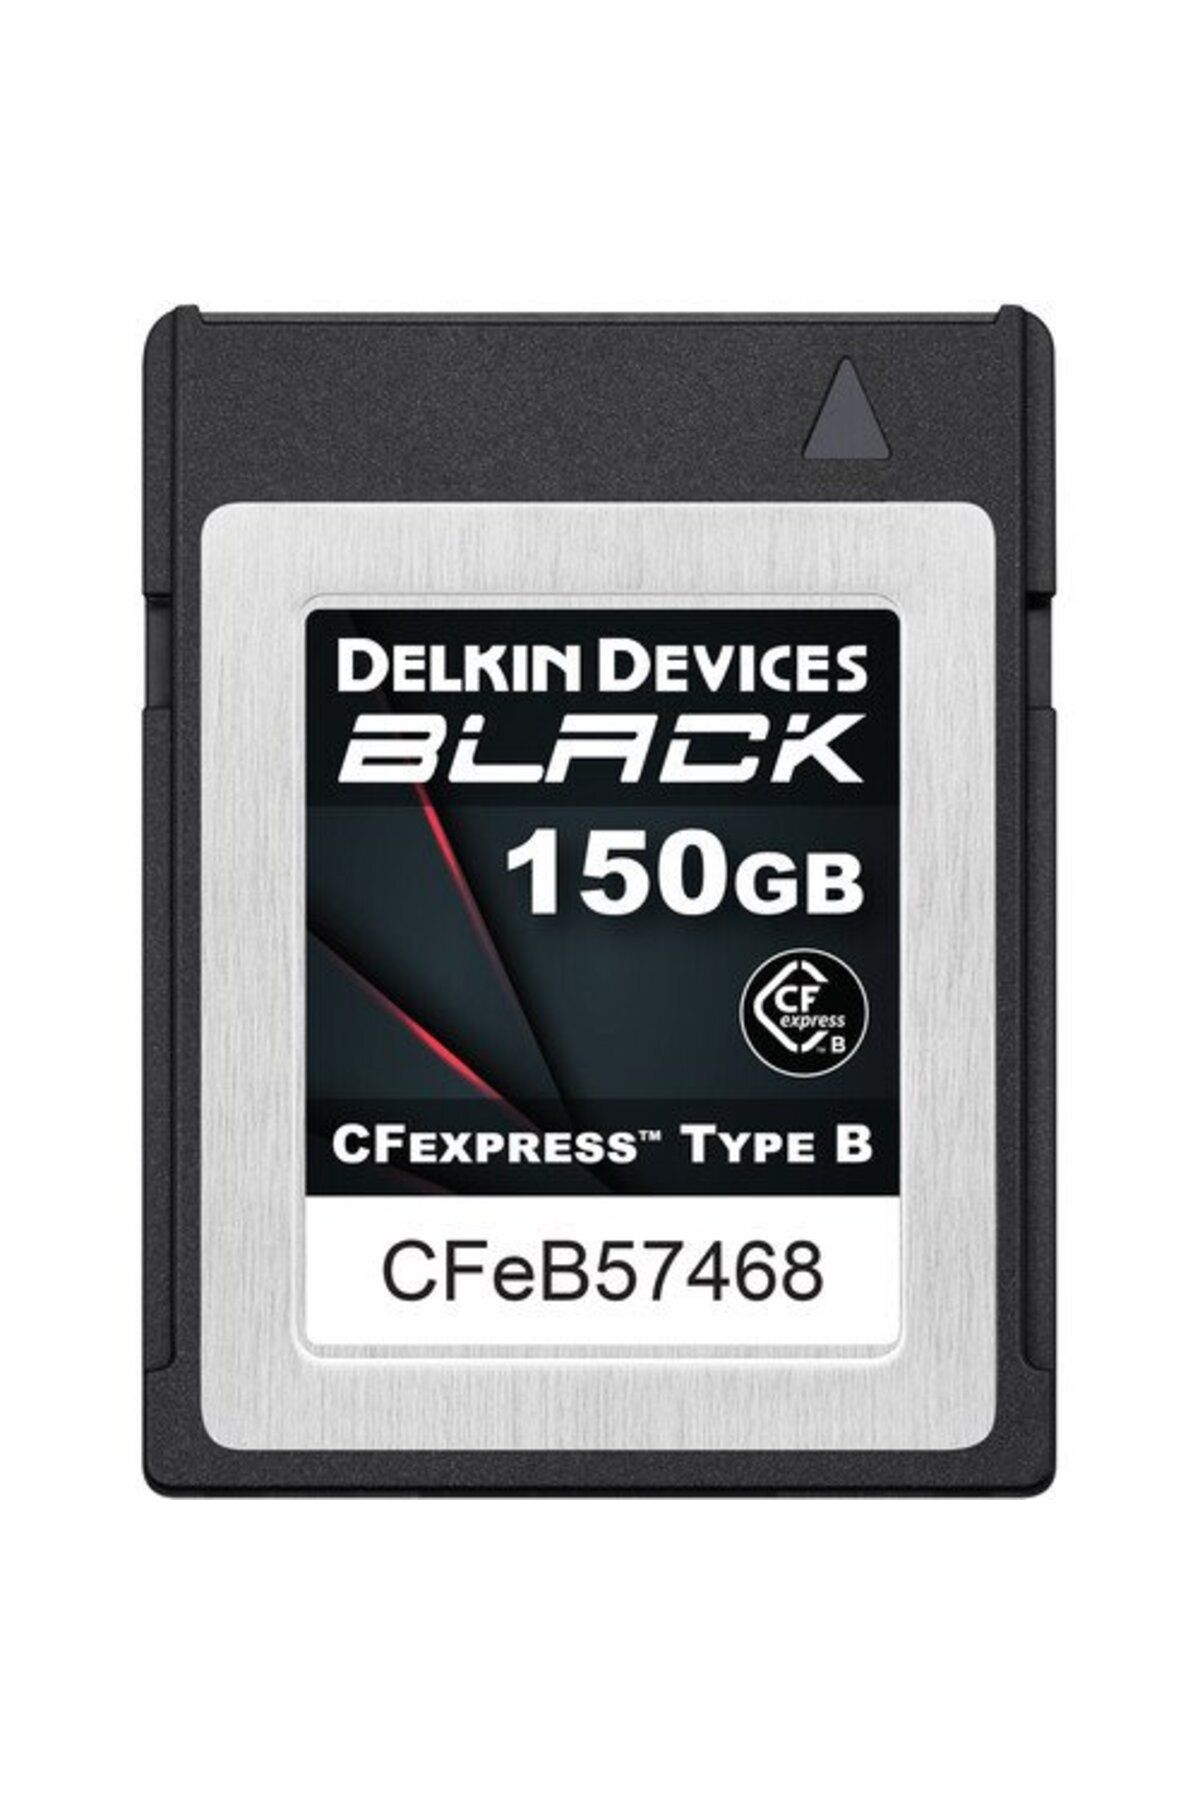 Delkin 150gb Black Cfexpress Type B Hafıza Kartı (DCFXBBLK150)